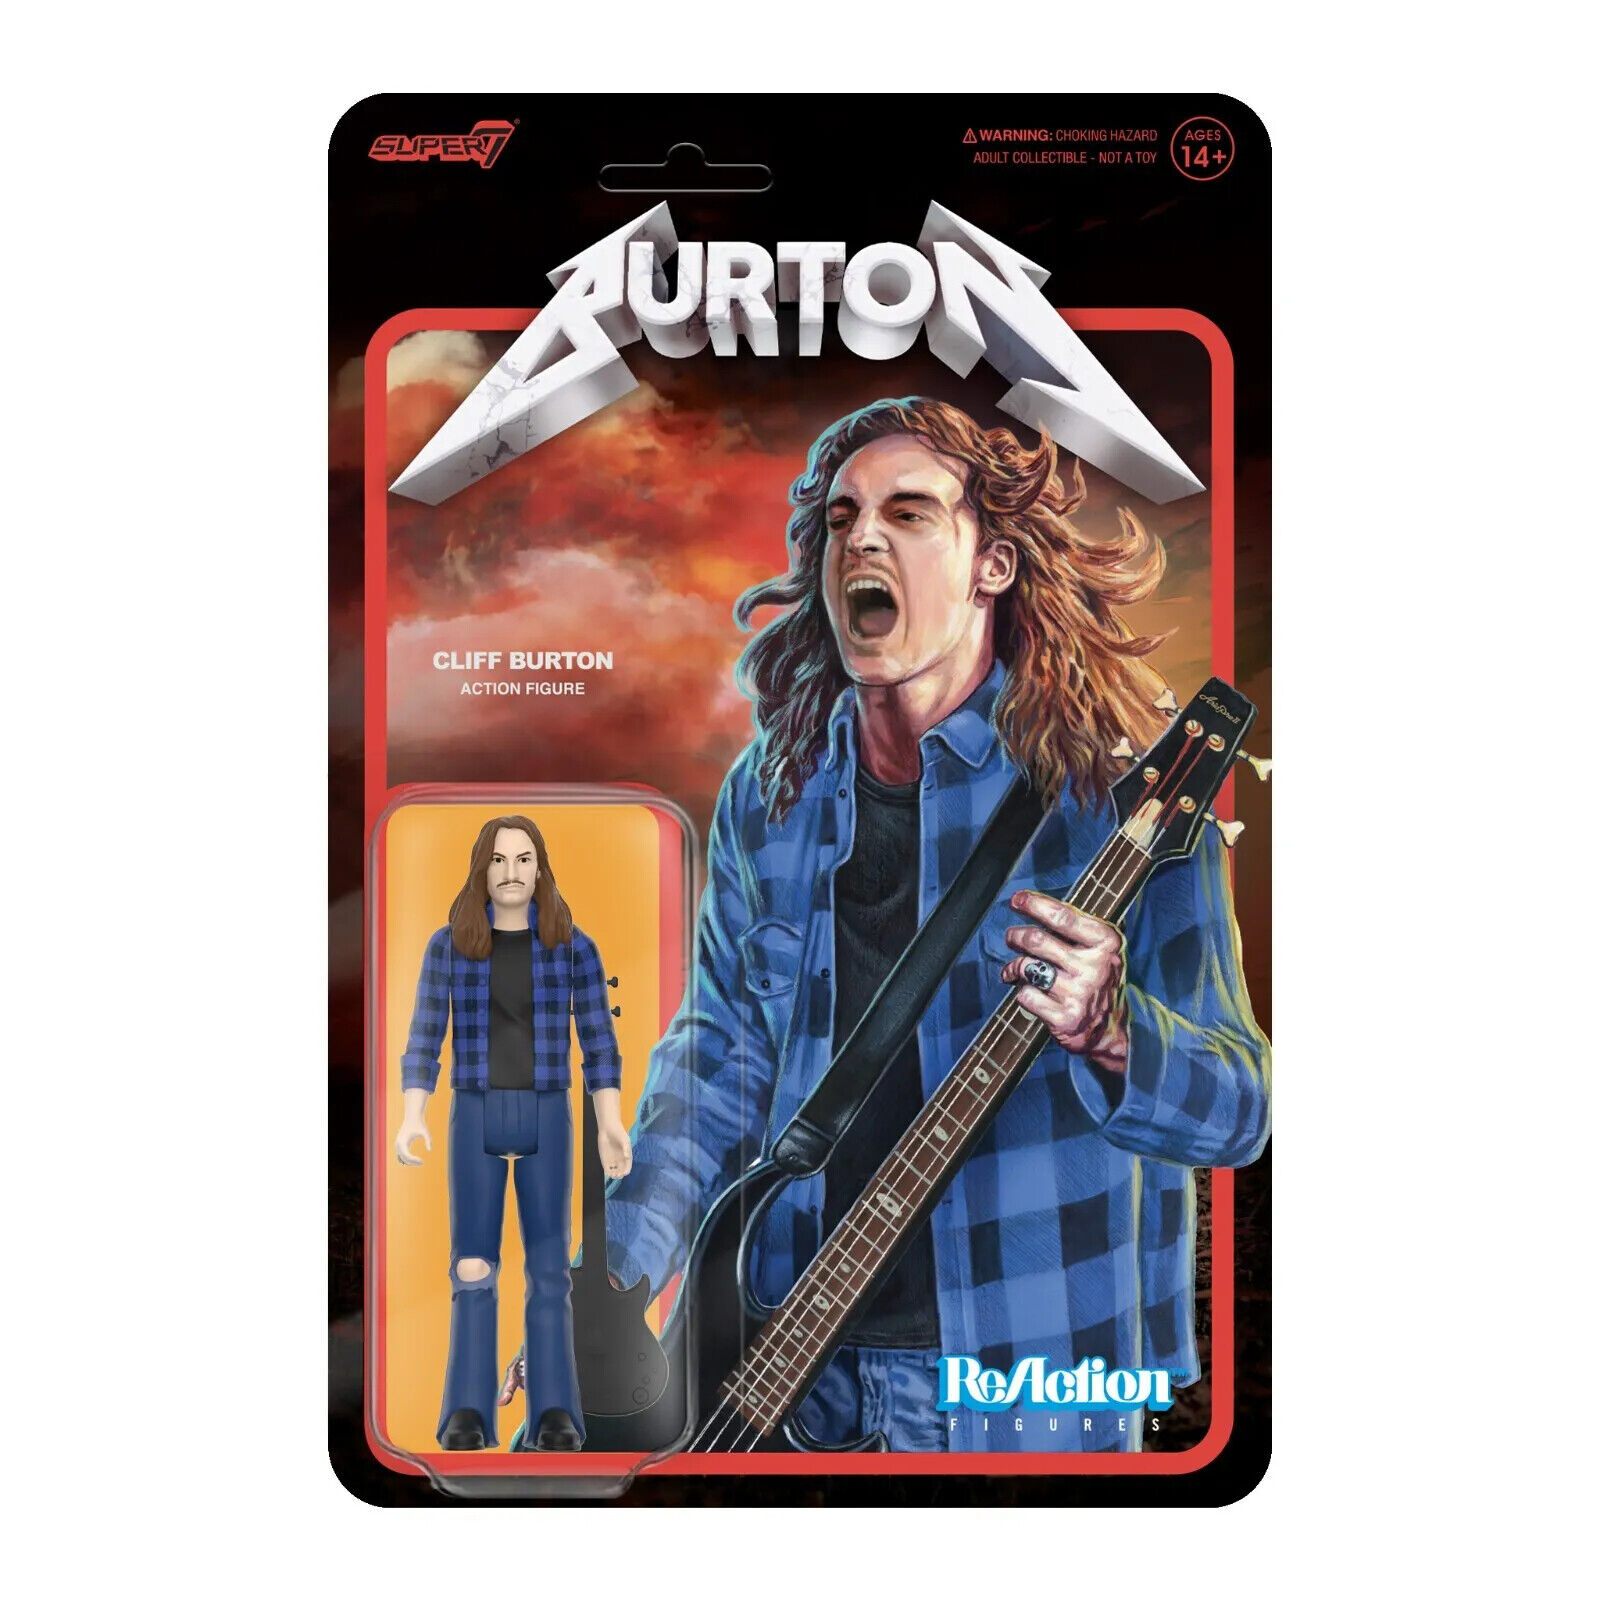 Cliff Burton Metallica Super 7 Reaction Action Figure